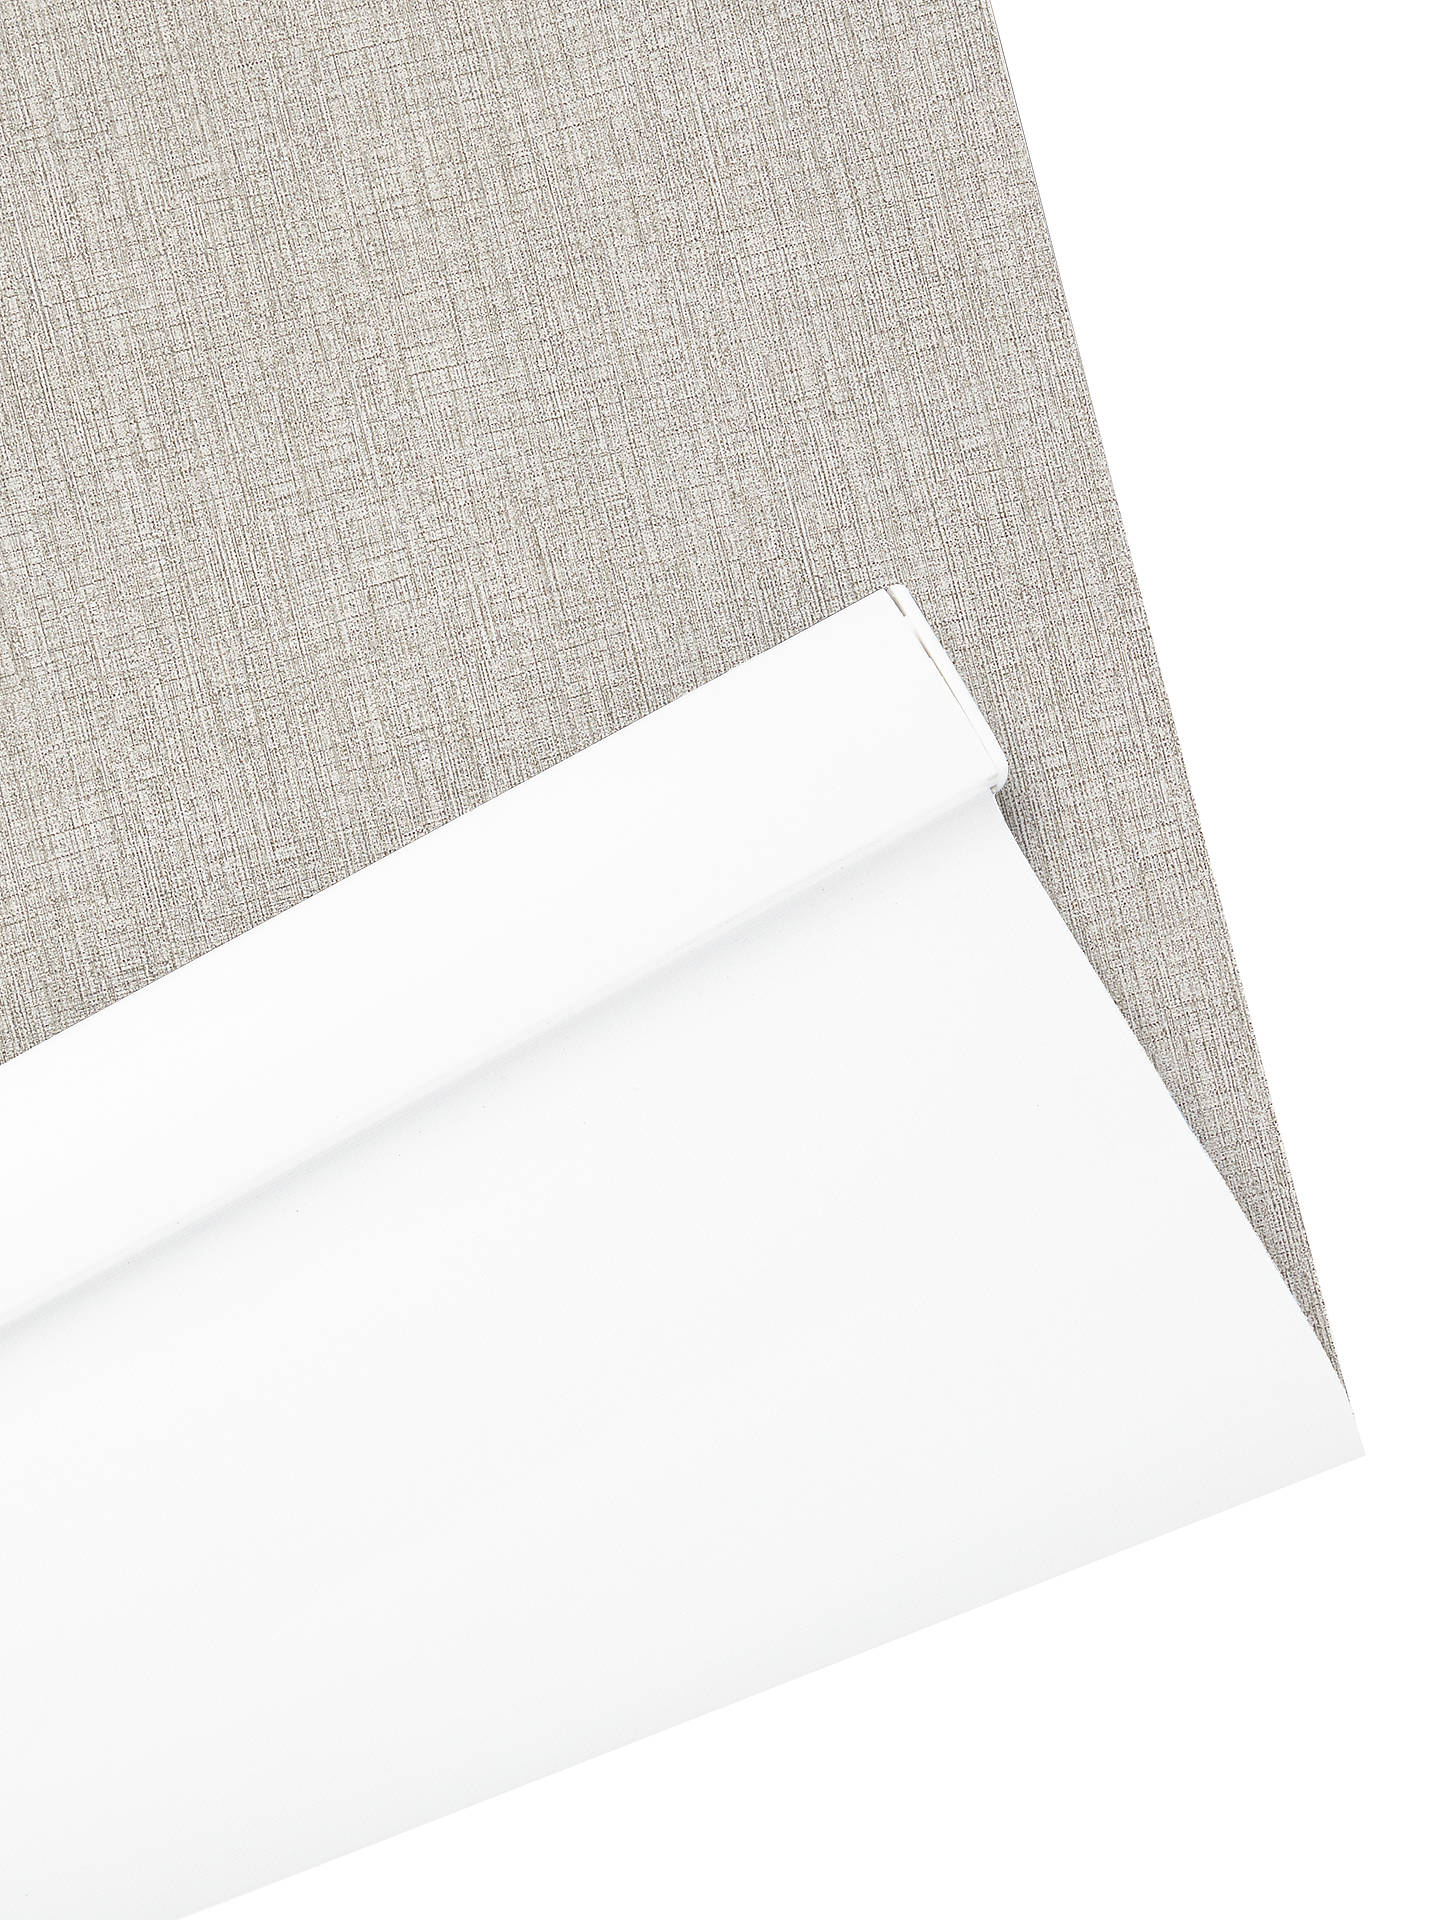 John Lewis Granada Plain Texture Made to Measure Blackout Roller Blind, Soft Linen